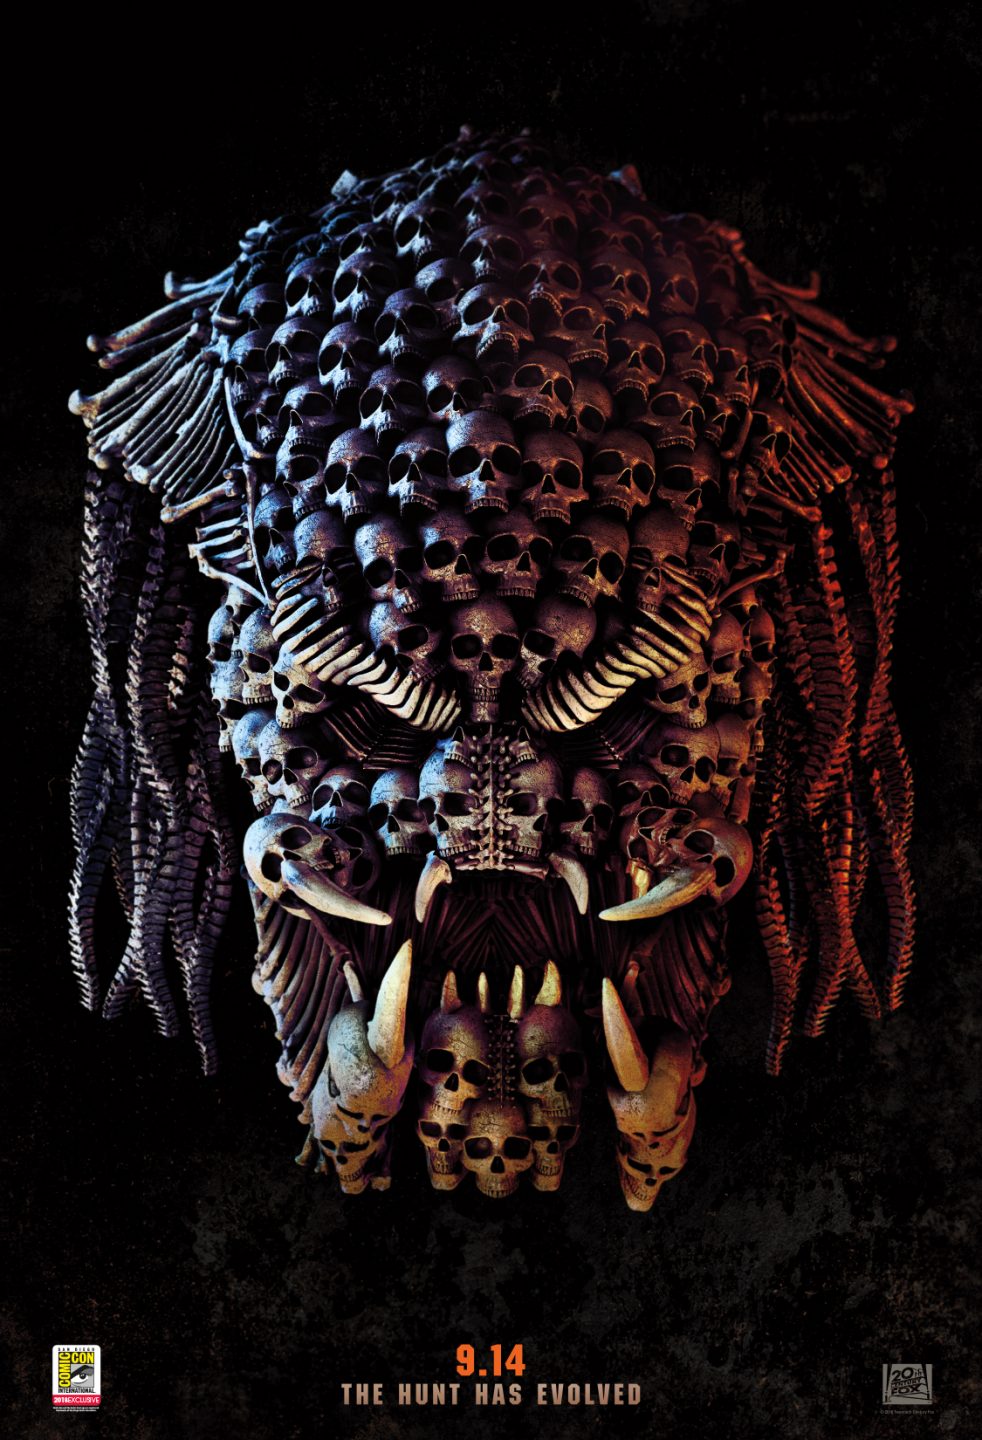 The Predator poster (20th Century Fox)